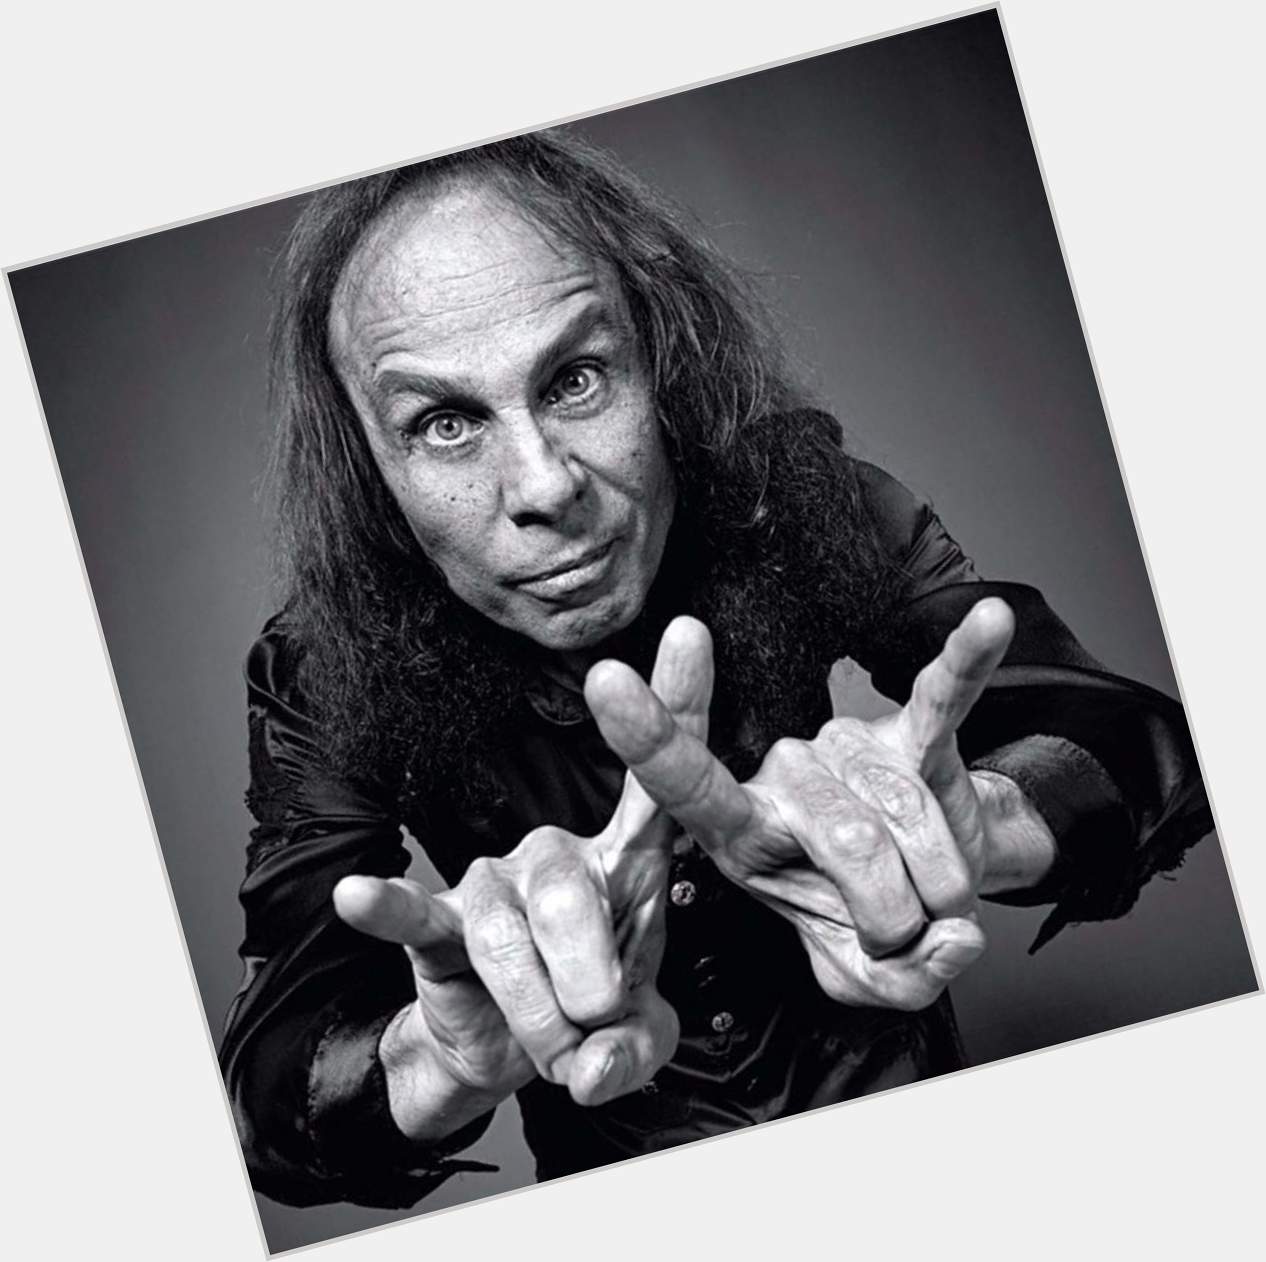 Happy birthday to Ronnie James Dio! 